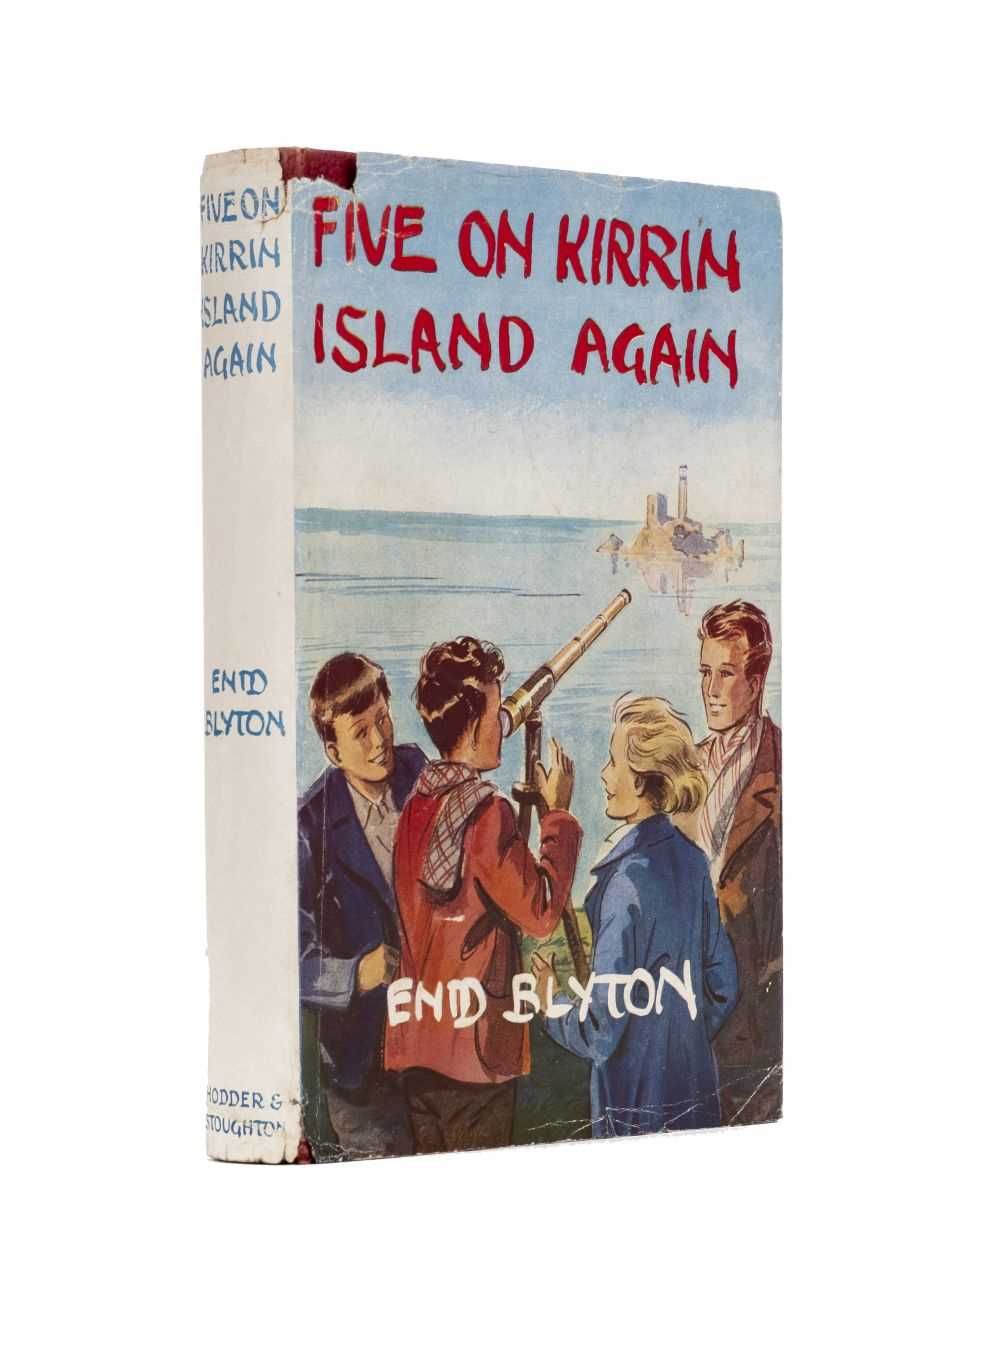 Lot 594 - Blyton (Enid). Five on Kirrin Island Again, 1st edition, Hodder & Stoughton, 1947